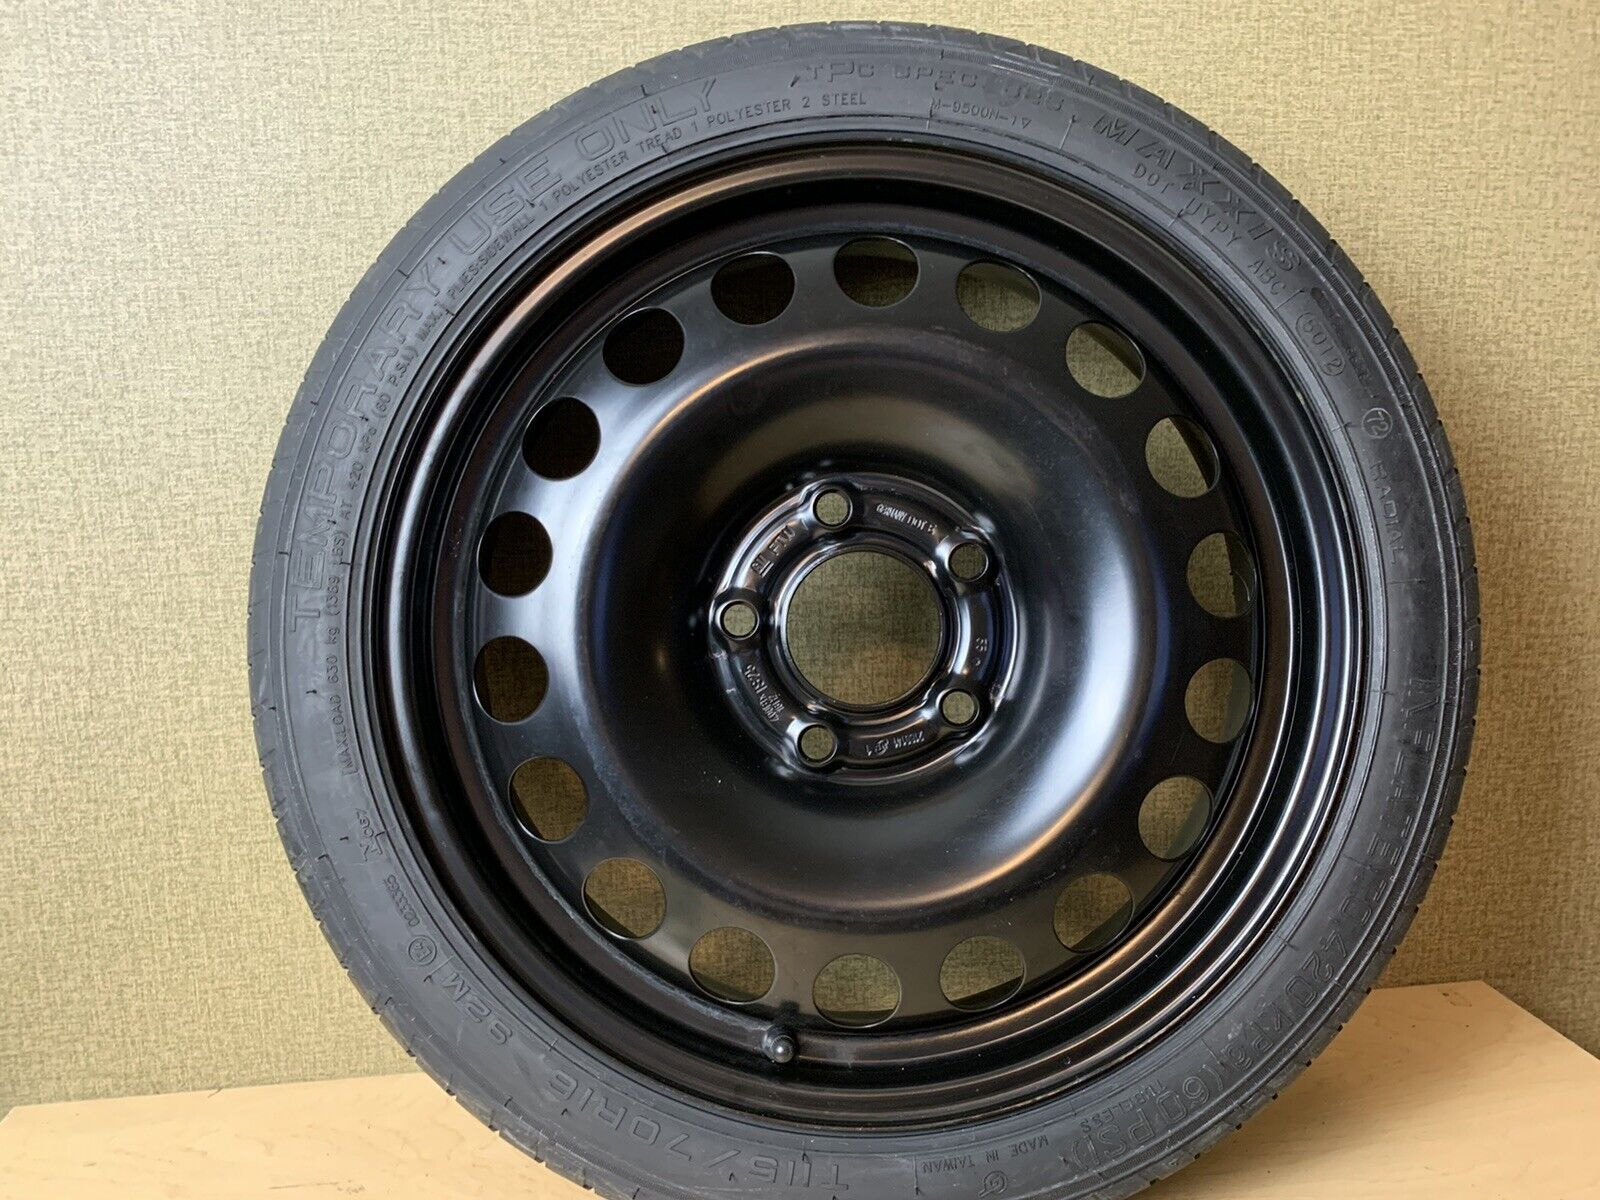 12-17 Buick Verano Spare Donut Tire Wheel Rim OEM T115/70R16